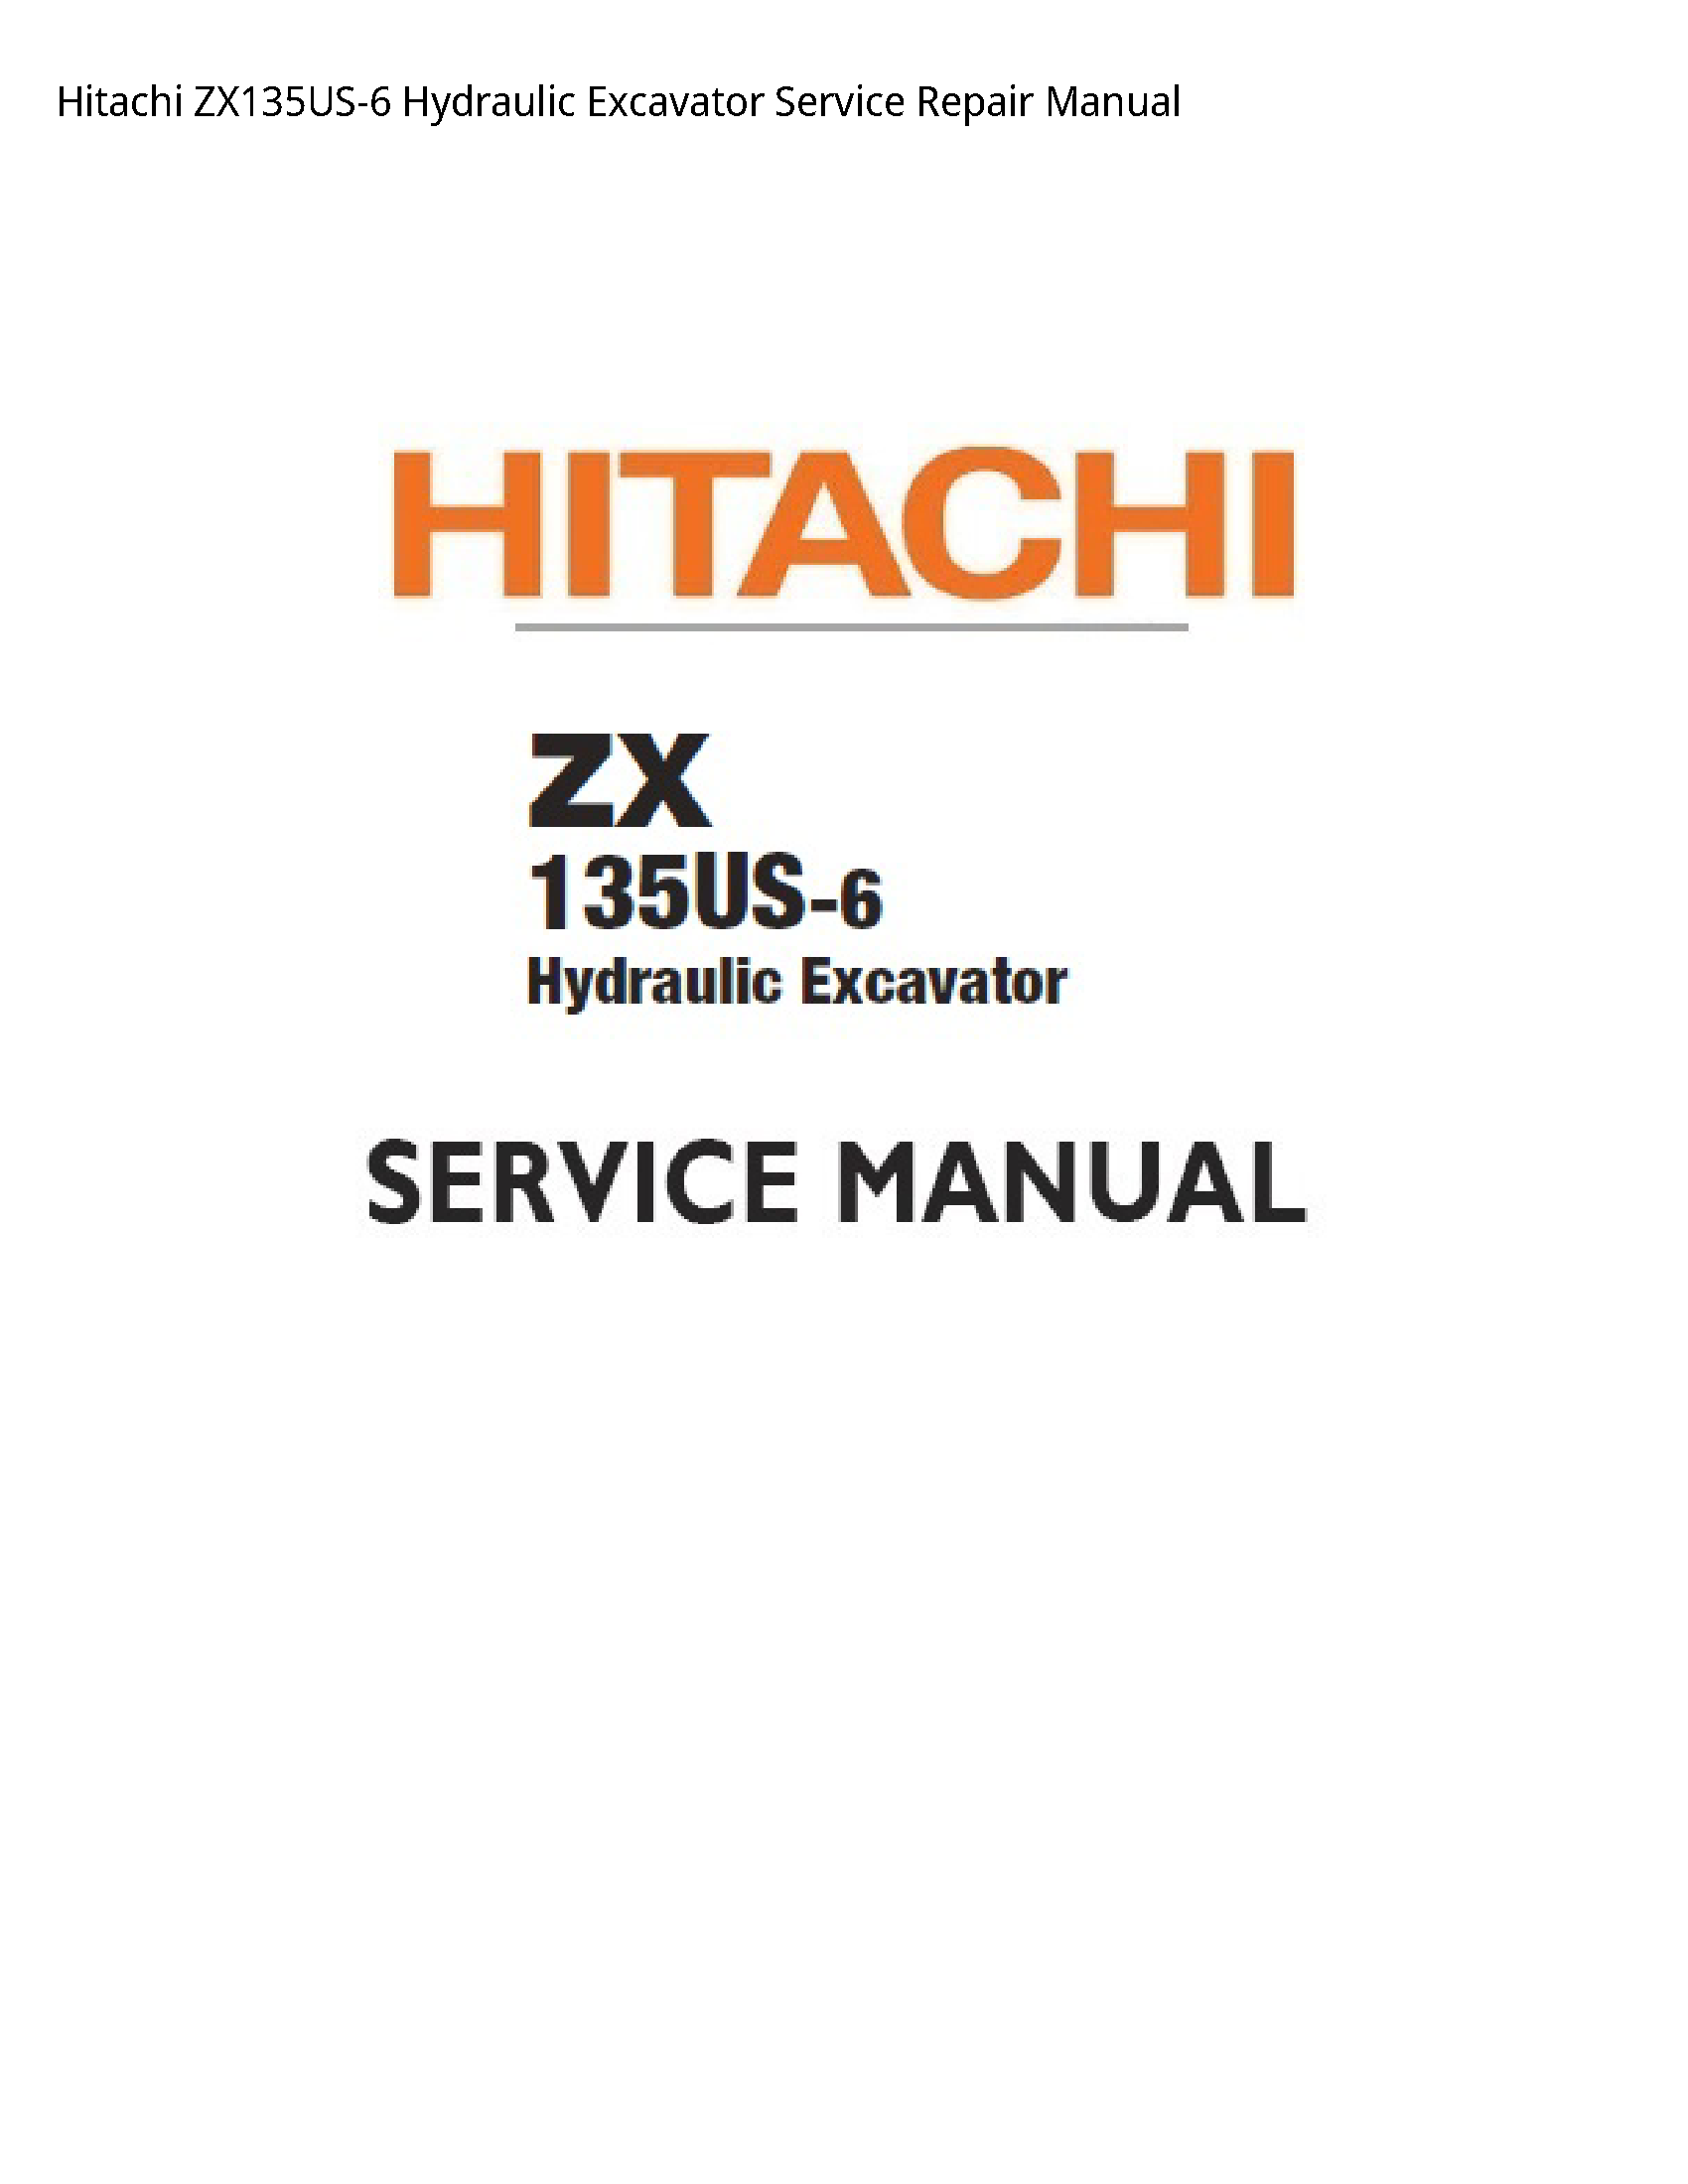 Hitachi ZX135US-6 Hydraulic Excavator manual